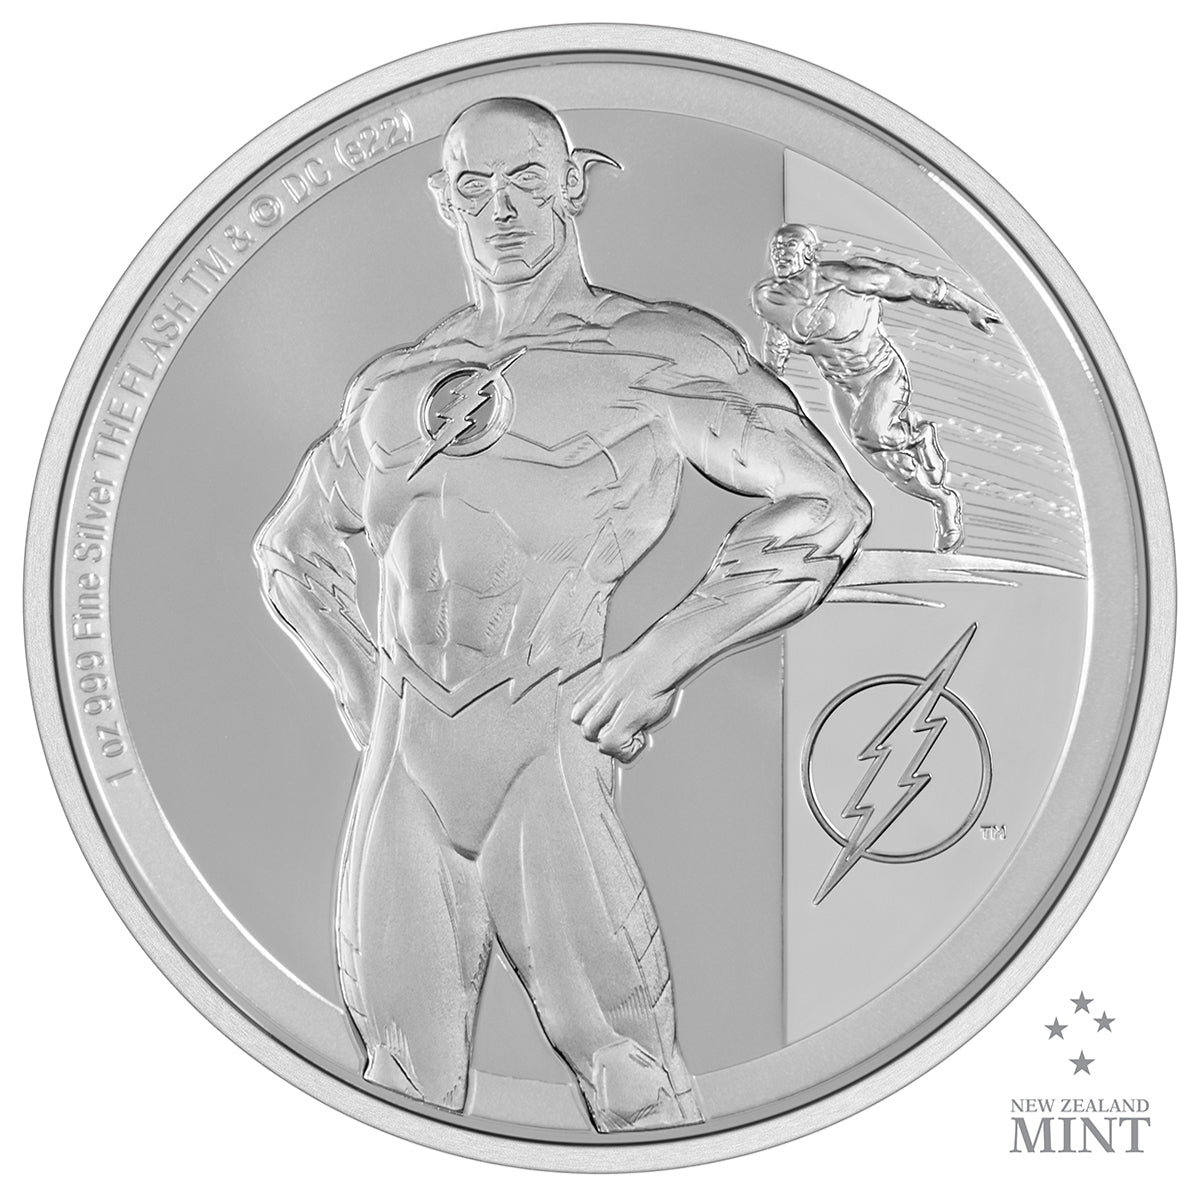 Niue Mint 2021 DC Comics The Flash 1 oz Silver Coin